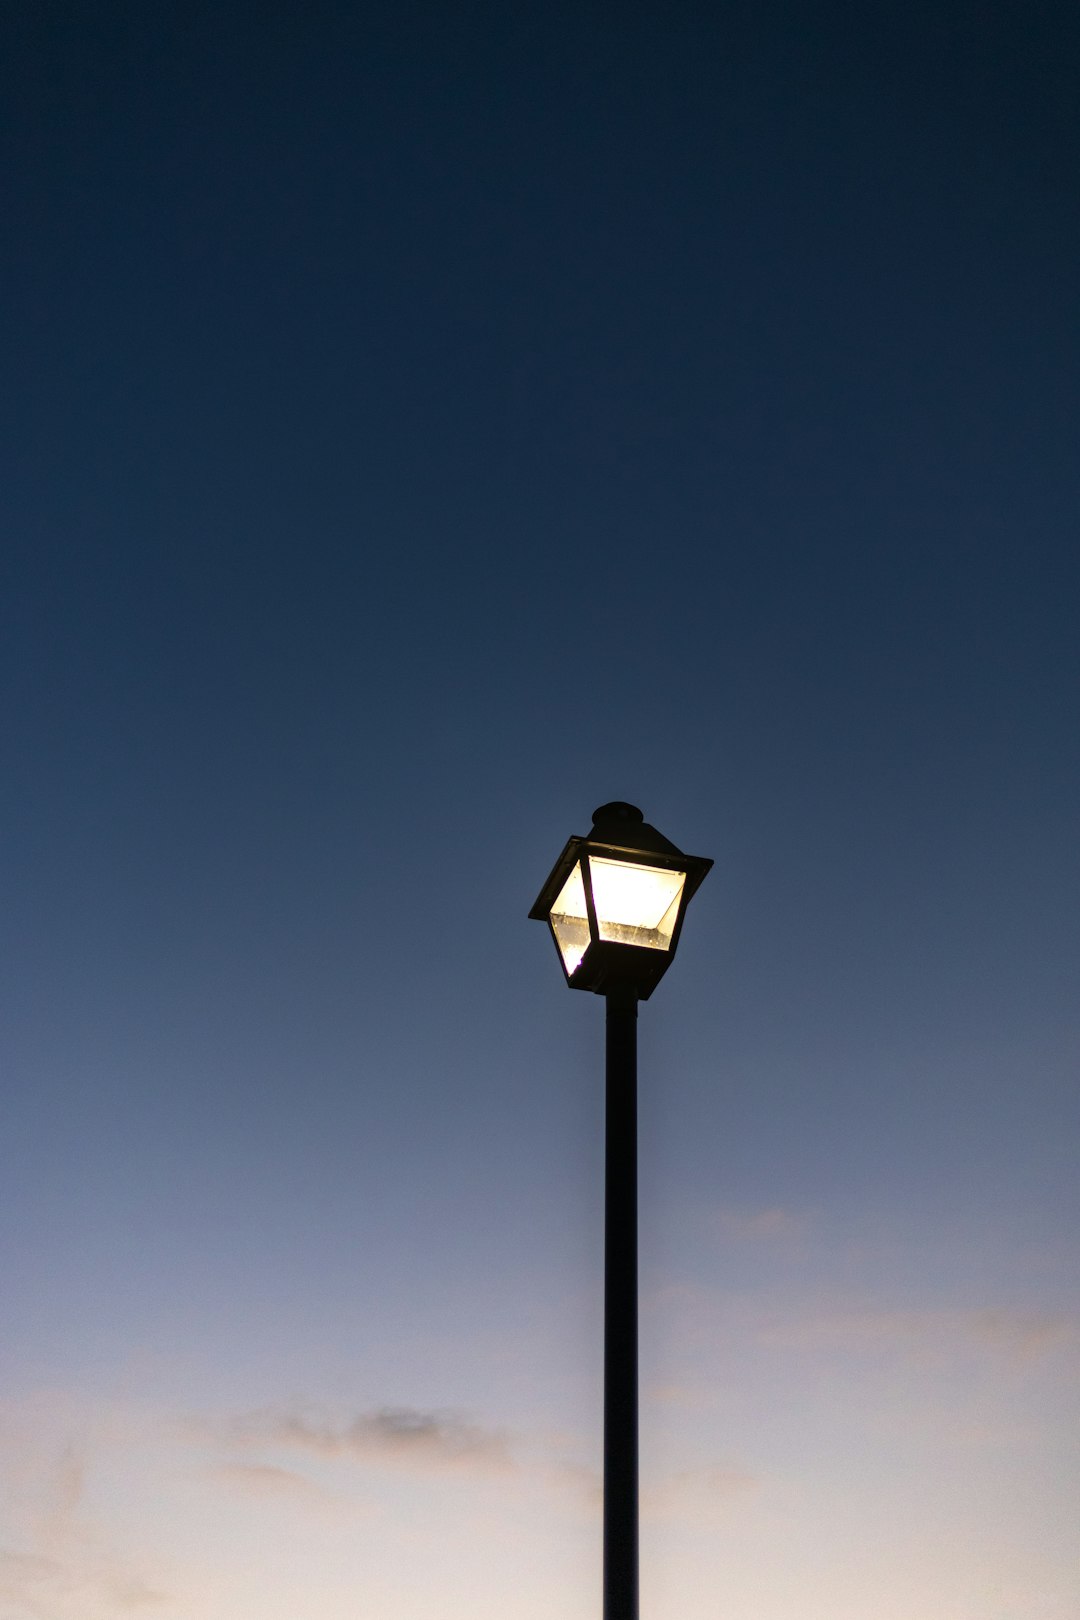 black street lamp under blue sky during daytime